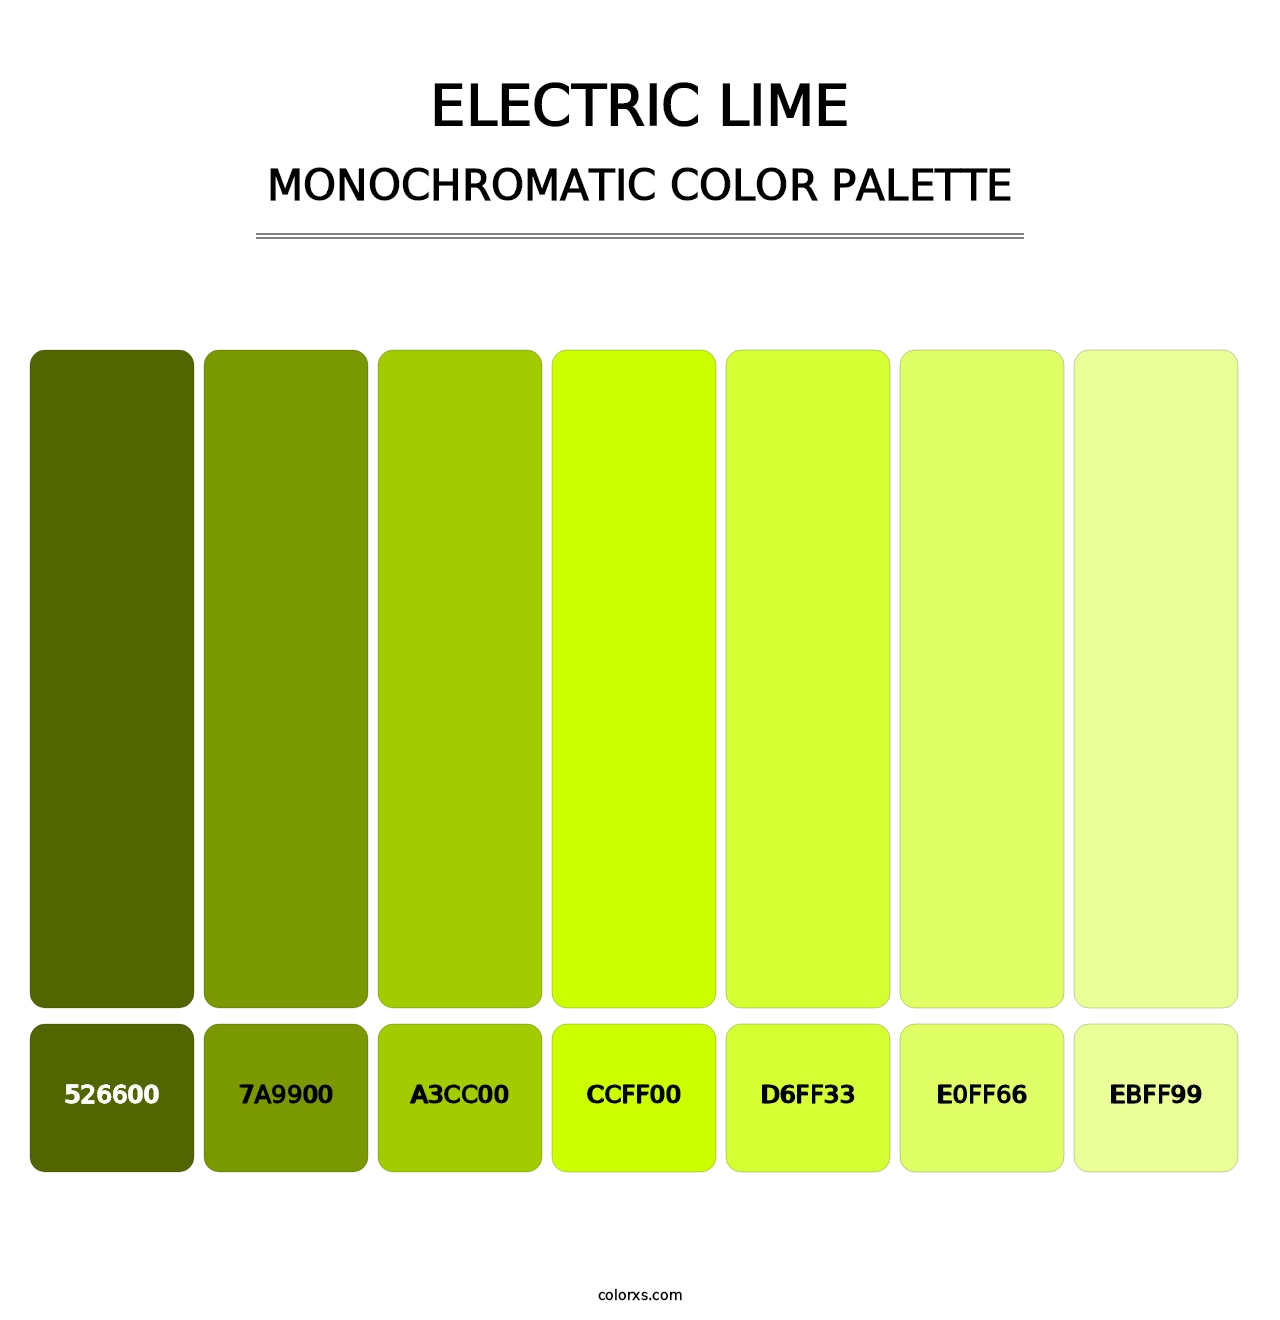 Electric Lime - Monochromatic Color Palette